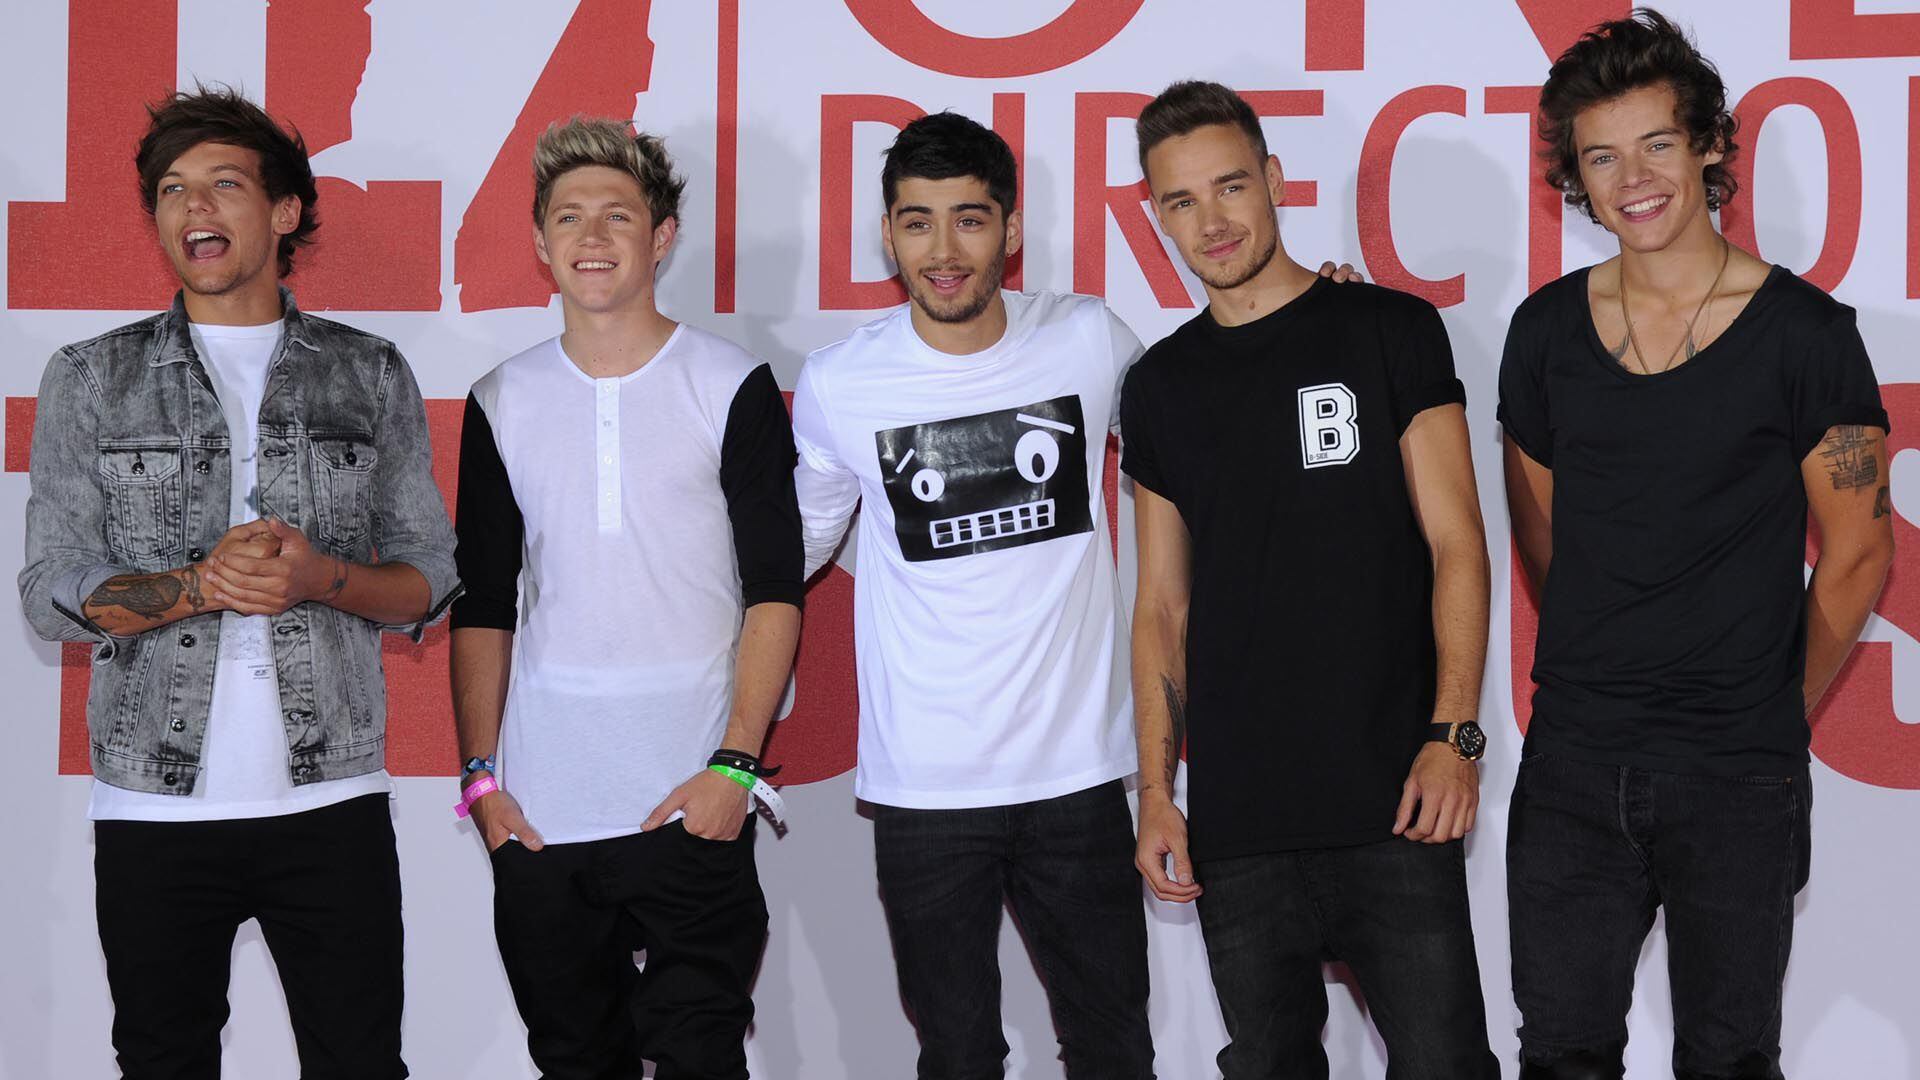 Louis Tomlinson, Niall Horan, Zayn Malik, Liam Payne y Harry Styles, integrantes de One Direction en 2013 (Crédito: Shutterstock)